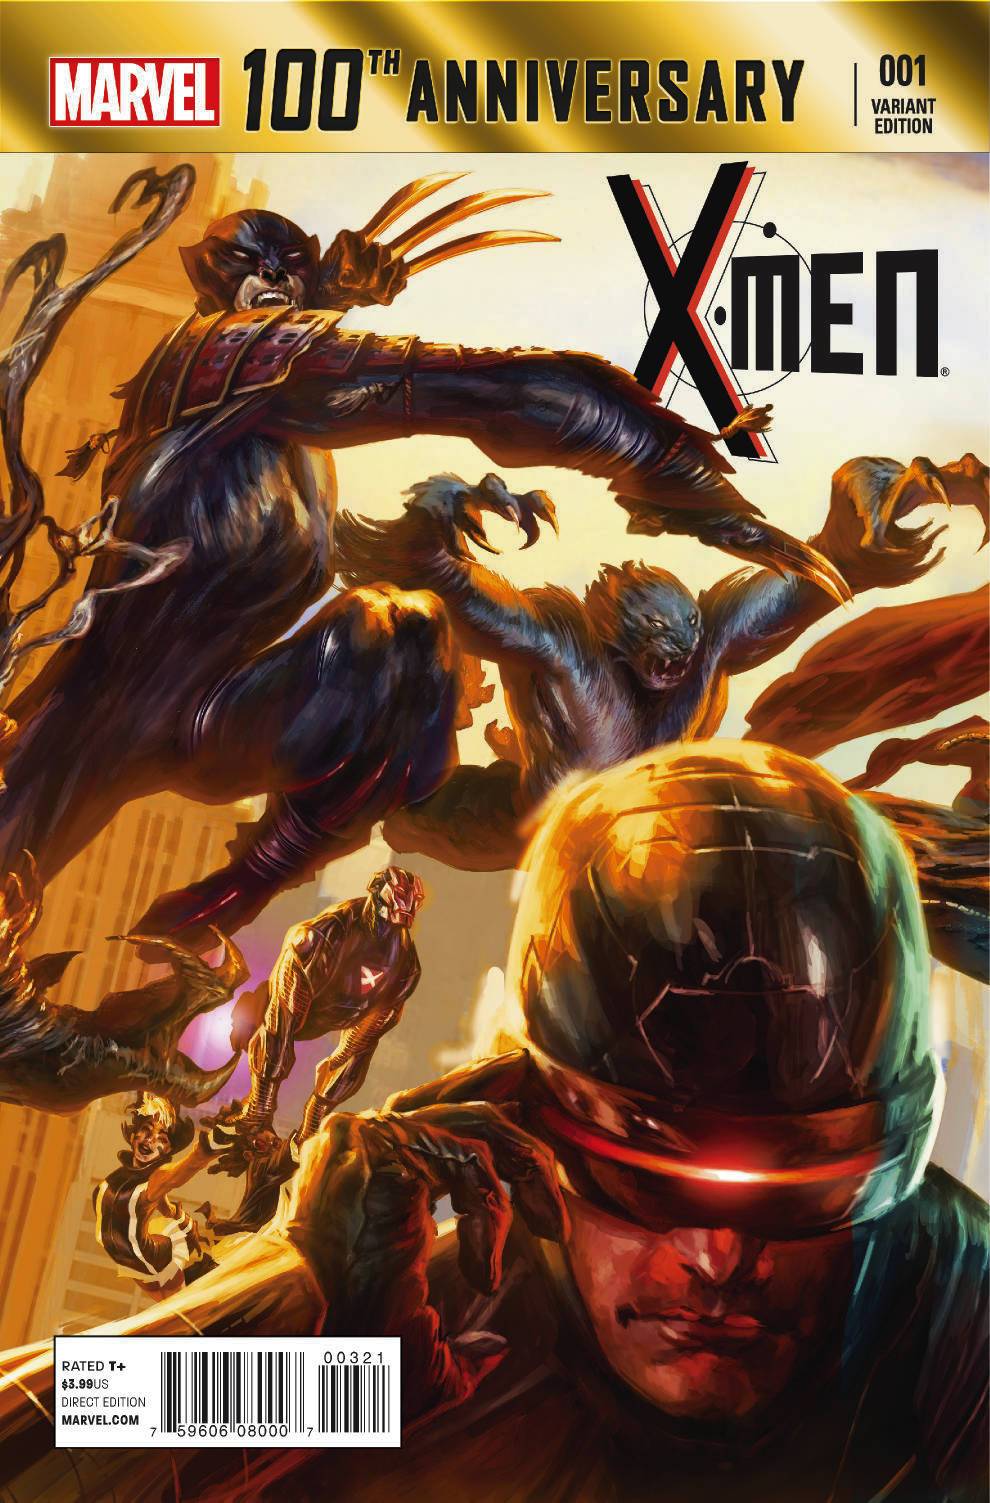 100th Anniversary Special #1 Volume 3 X-Men